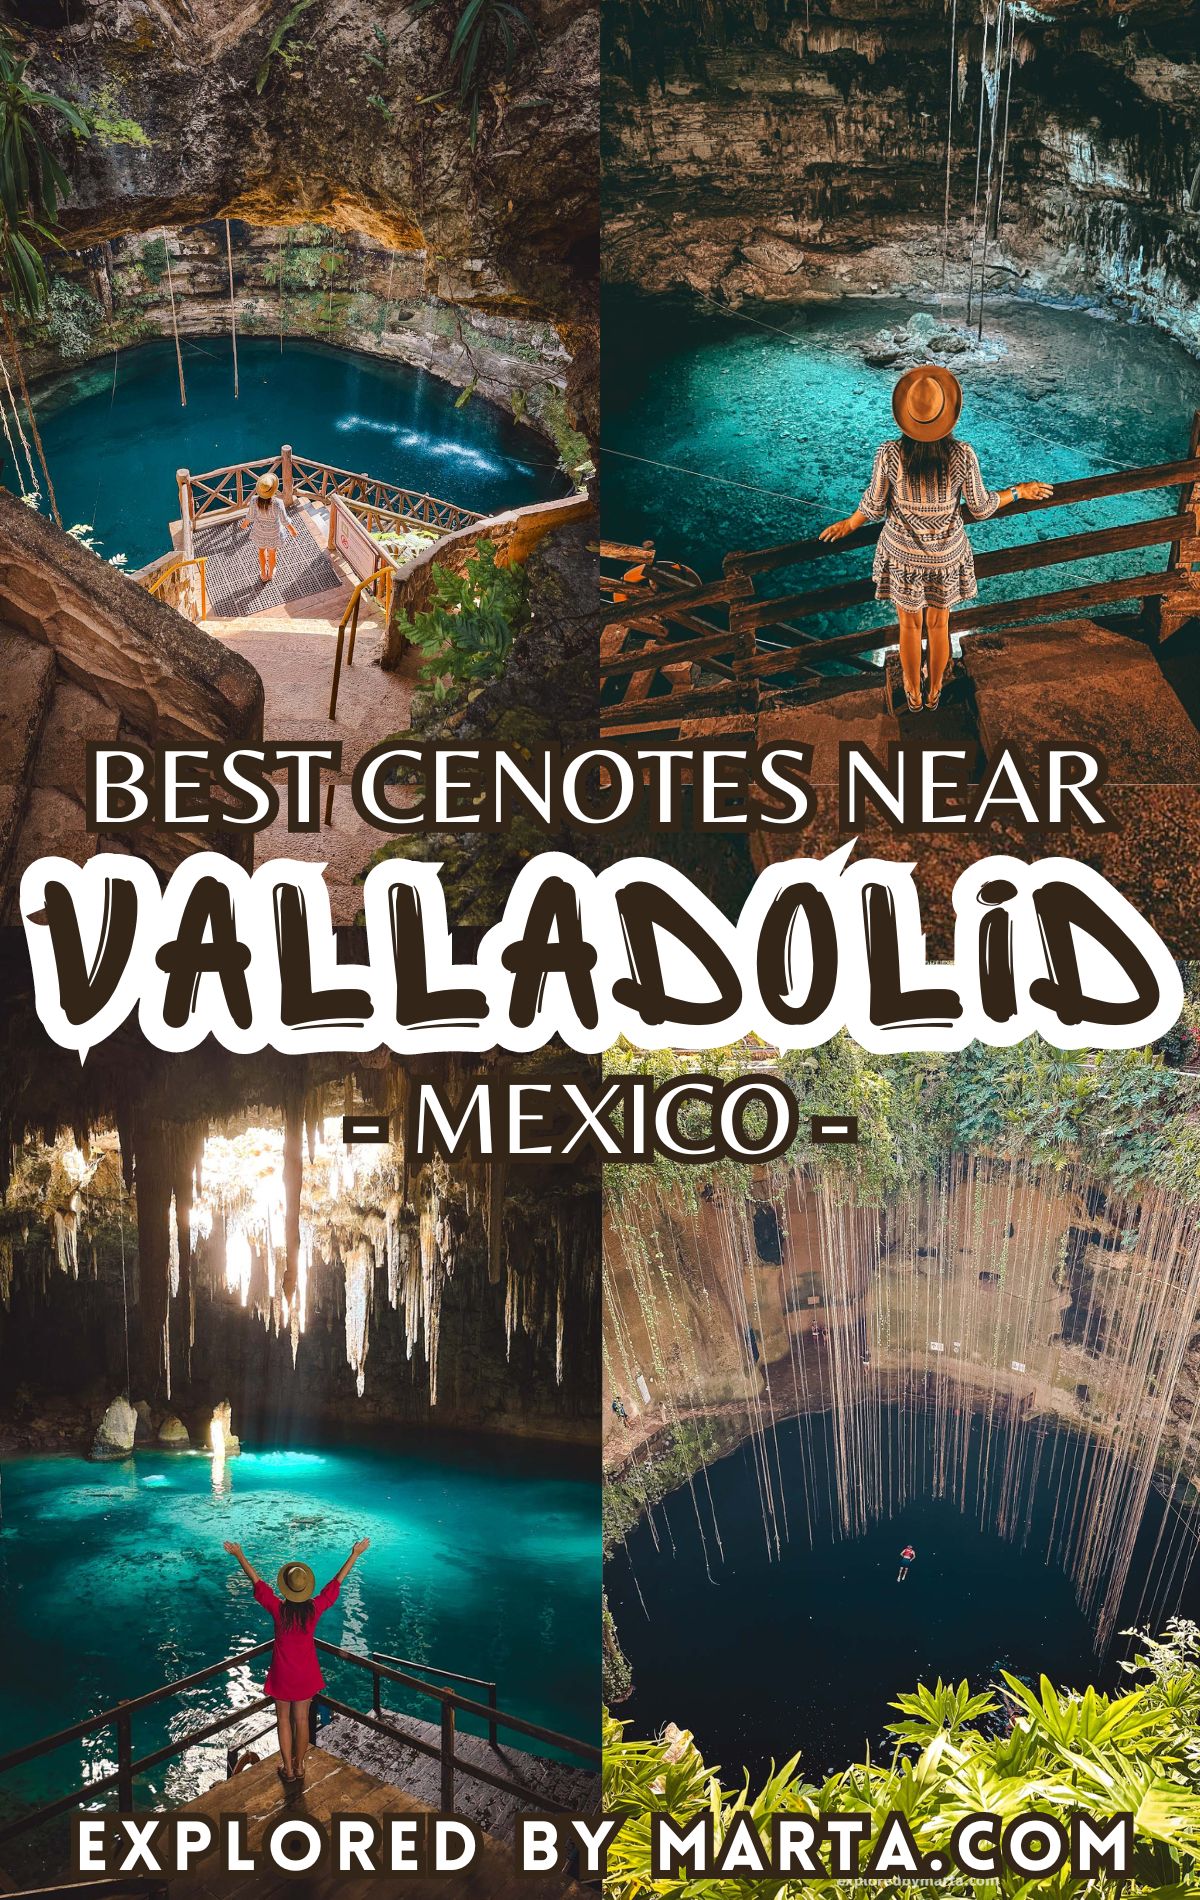 Most beautiful cenotes near Valladolid, Mexico